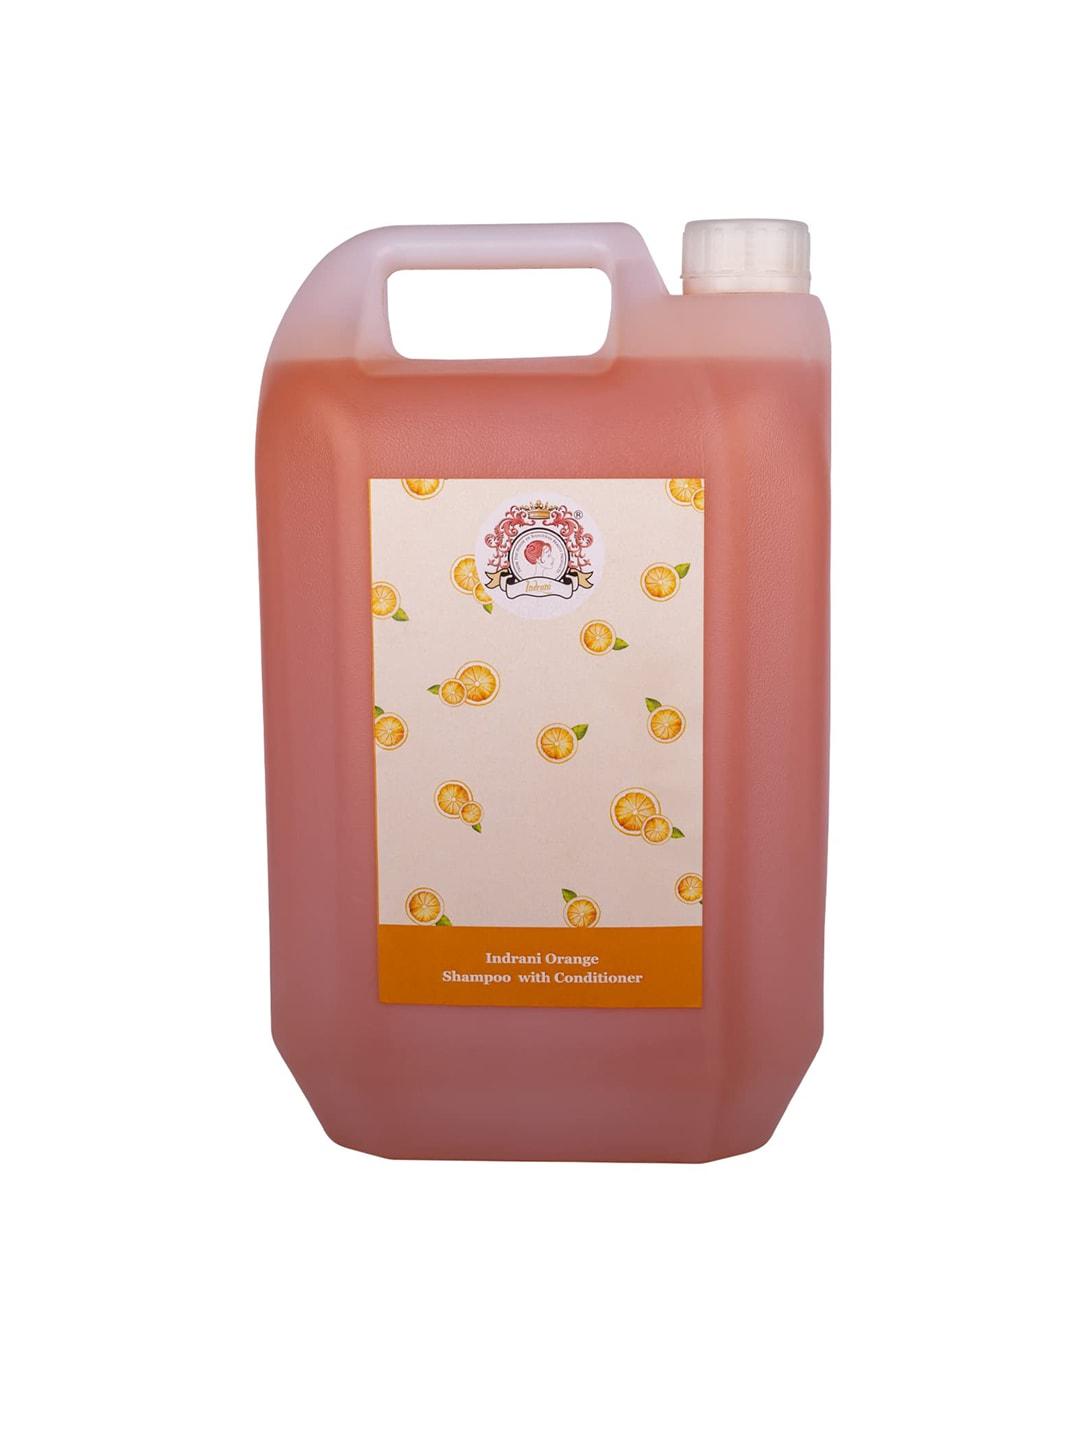 indrani cosmetics orange shampoo with conditioner - 5 litres